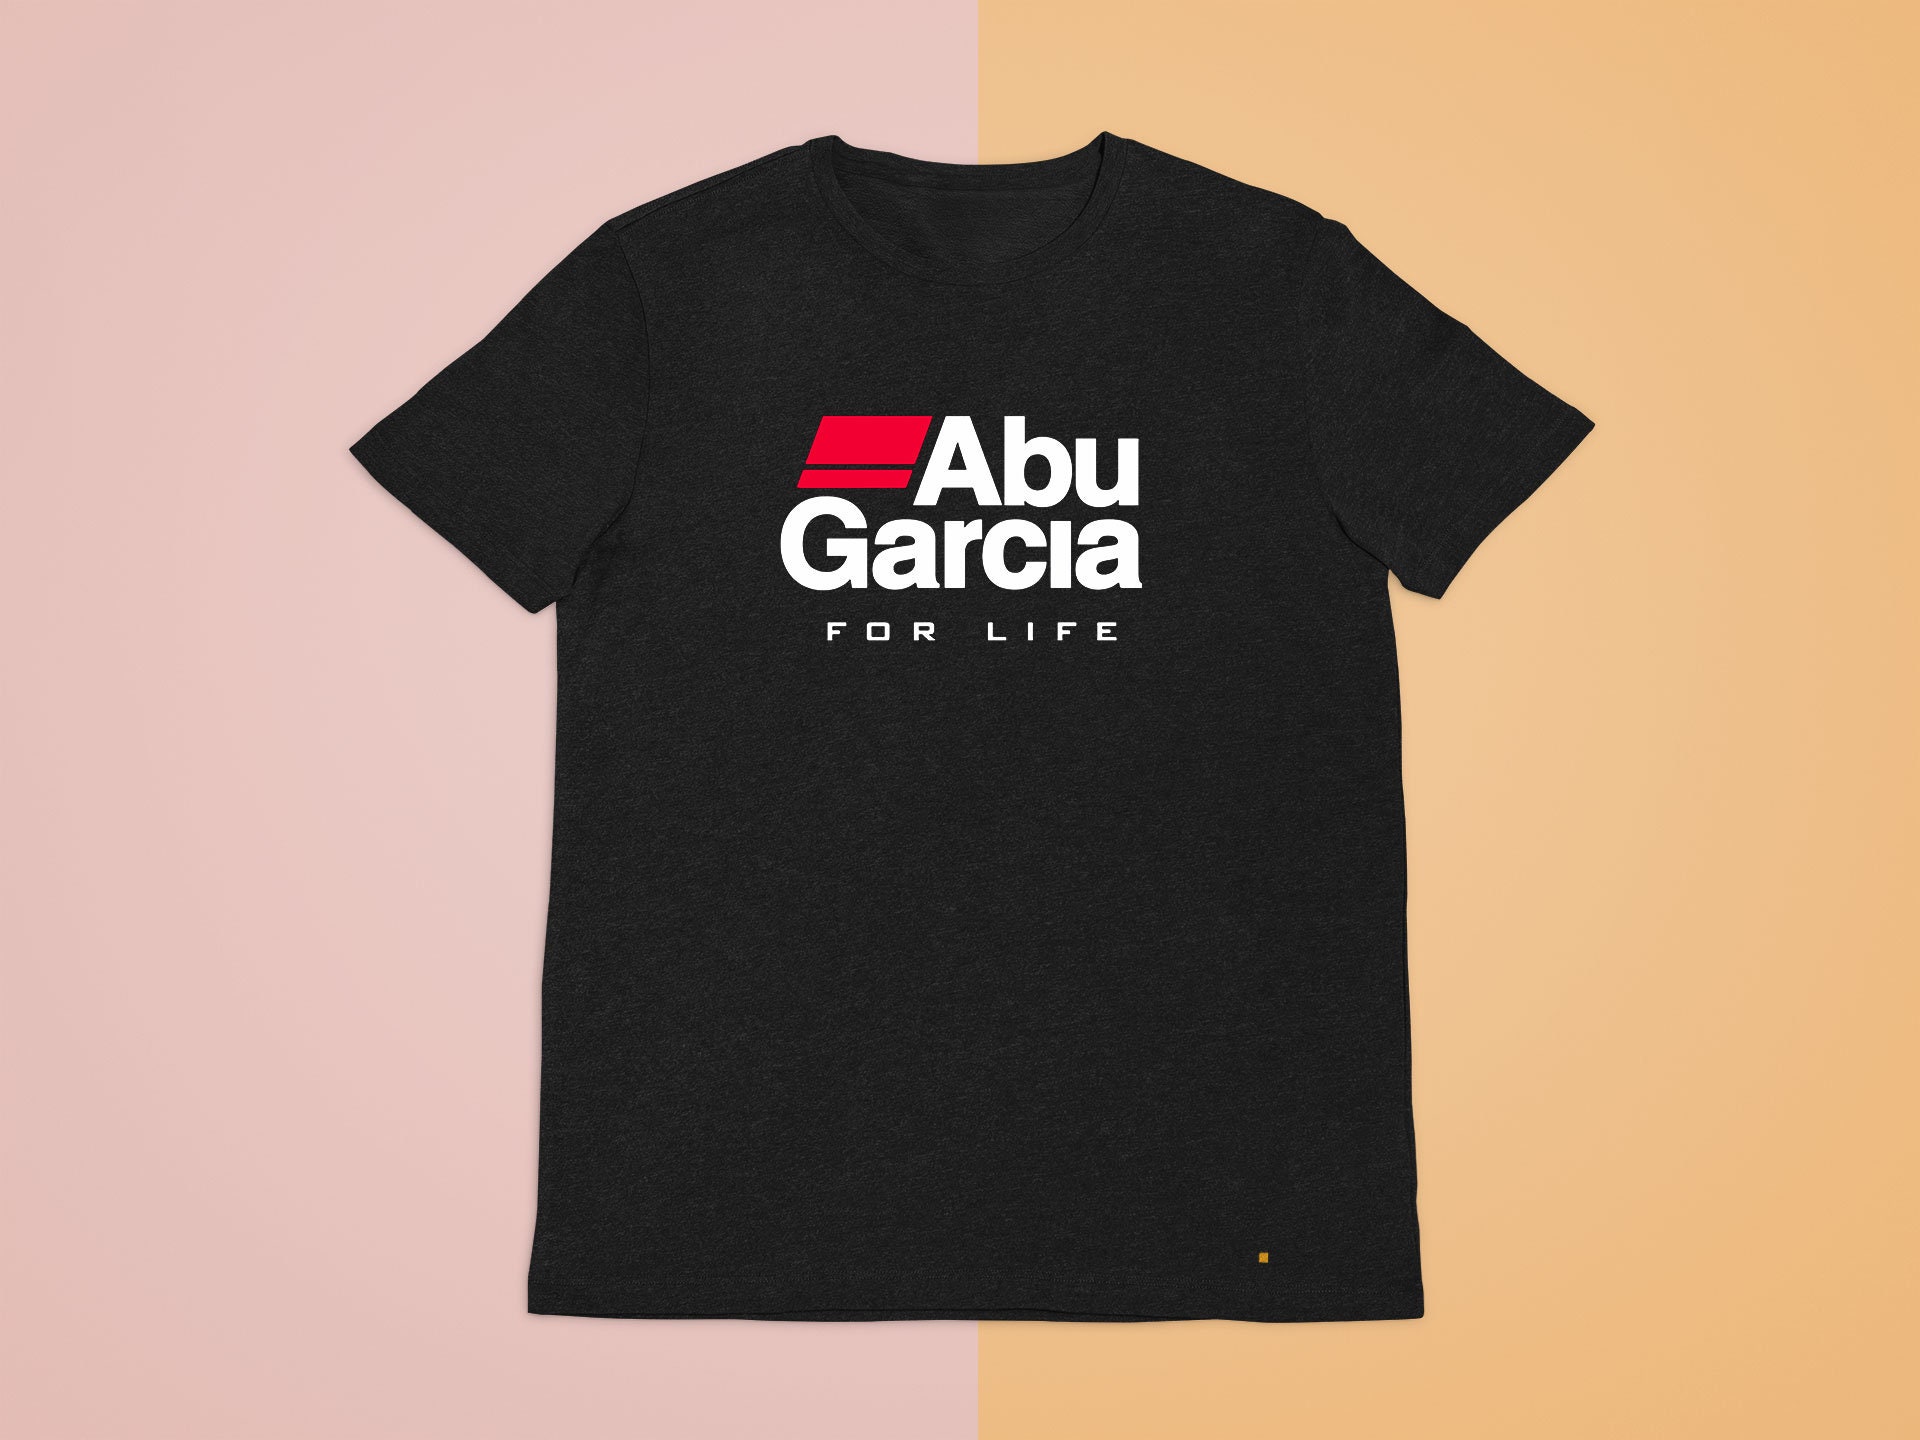 Abu Garcia Fishing Logo Black Tee Shirt Clothing Size S-4xl